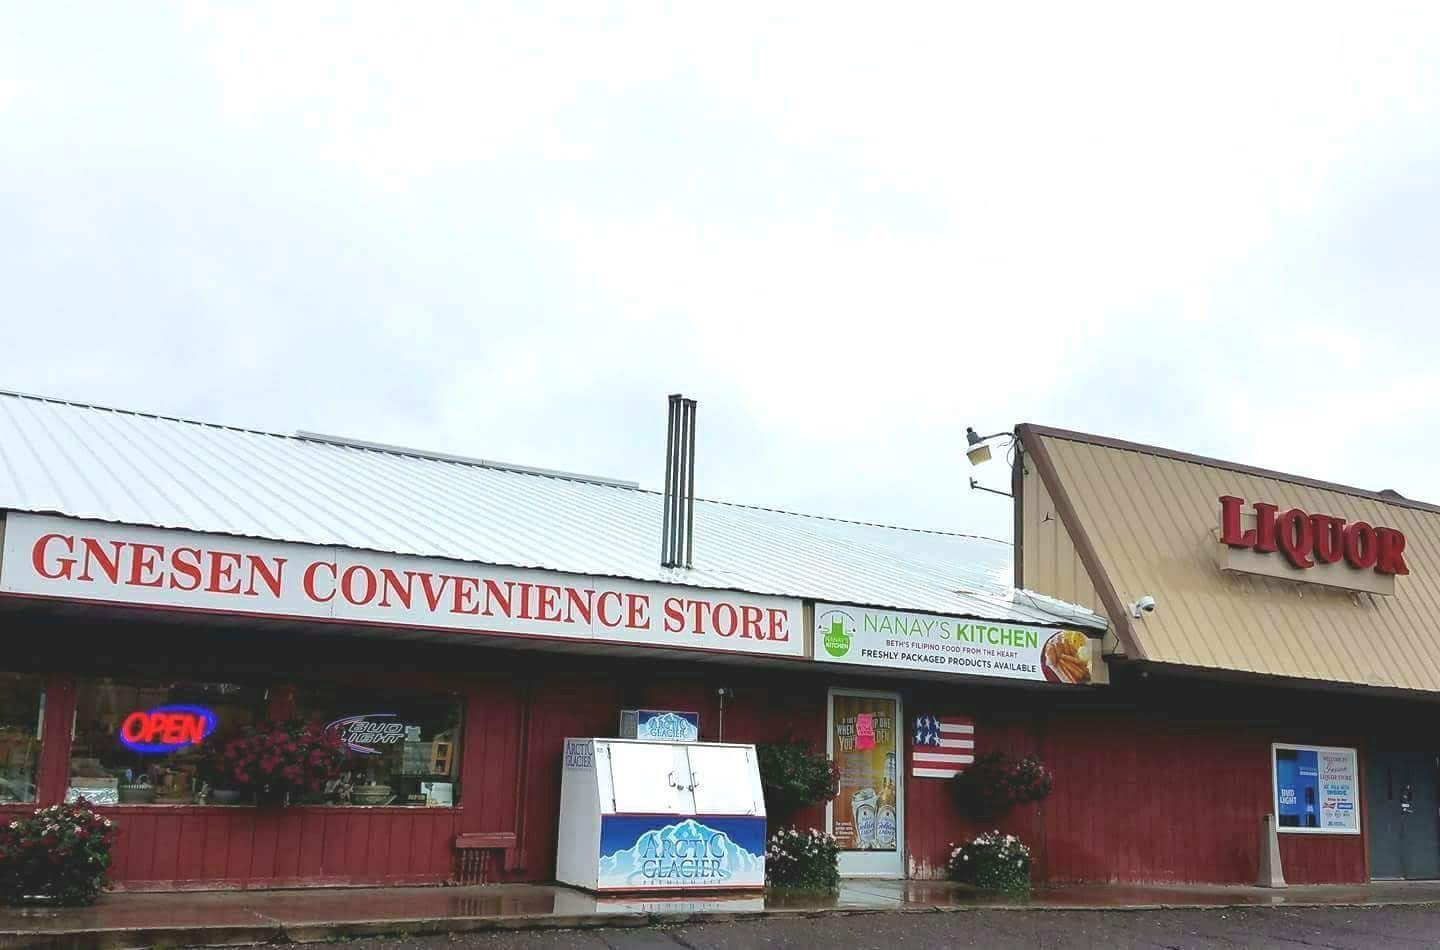 Gnesen Convenience Store and Liquor